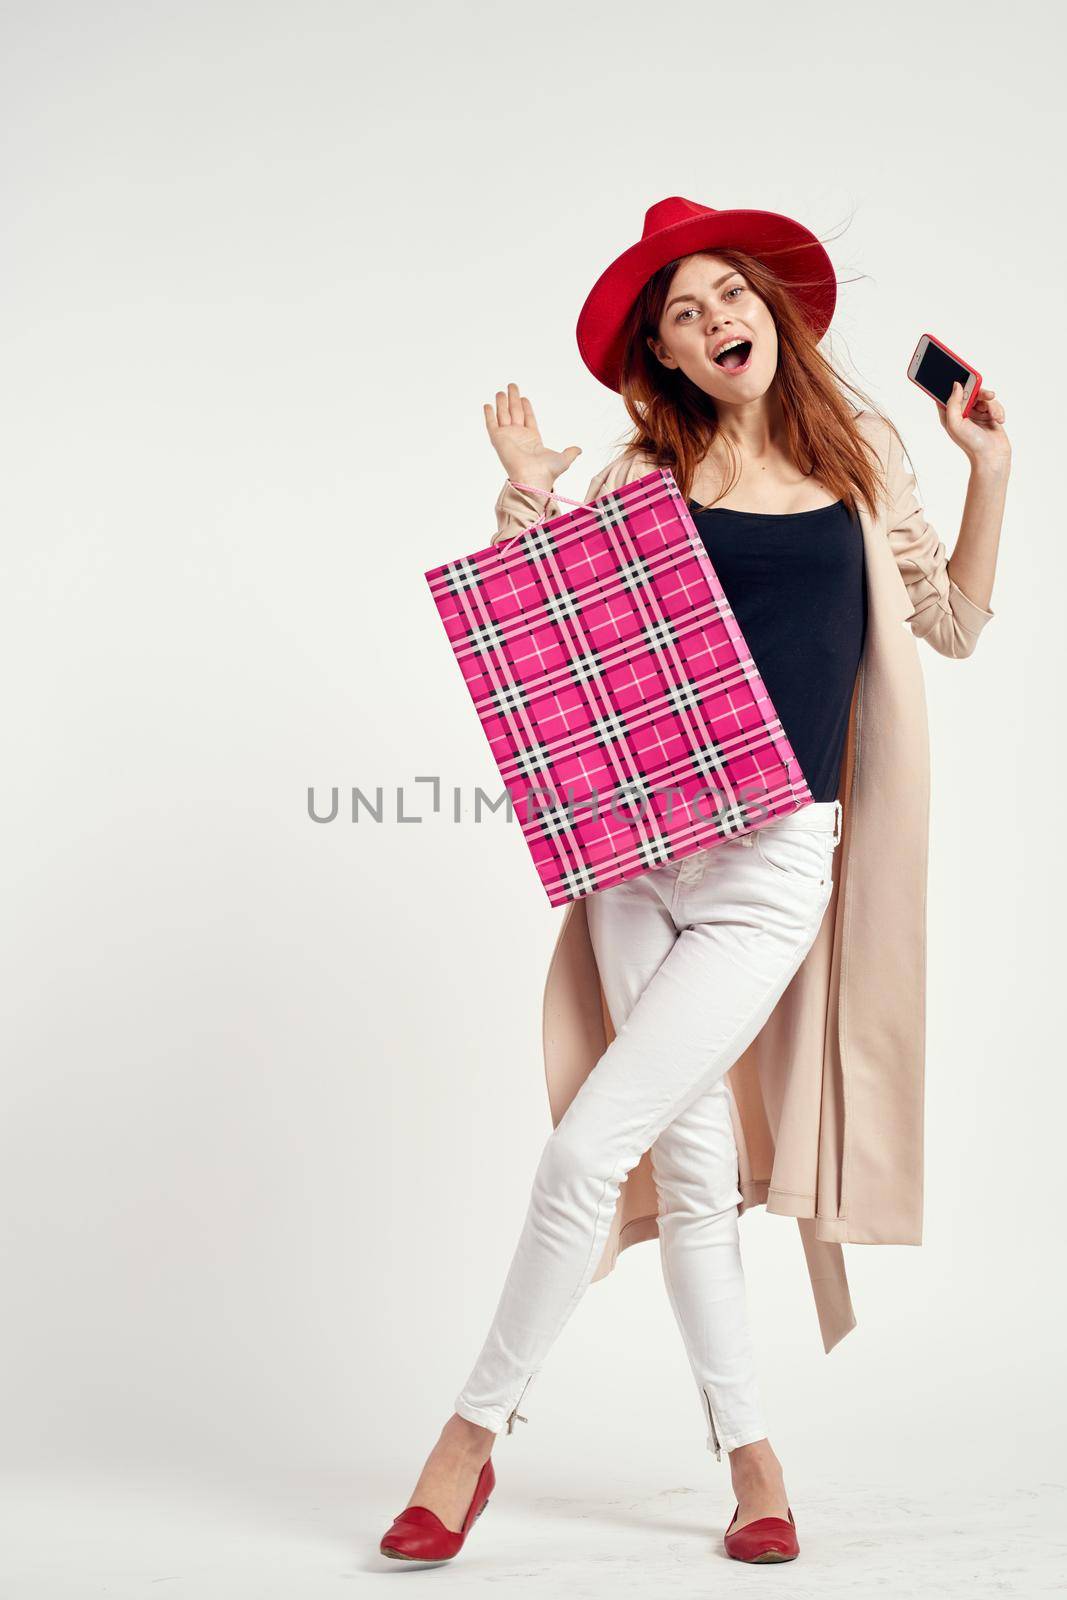 beautiful woman wearing a red hat posing shopping fun light background. High quality photo